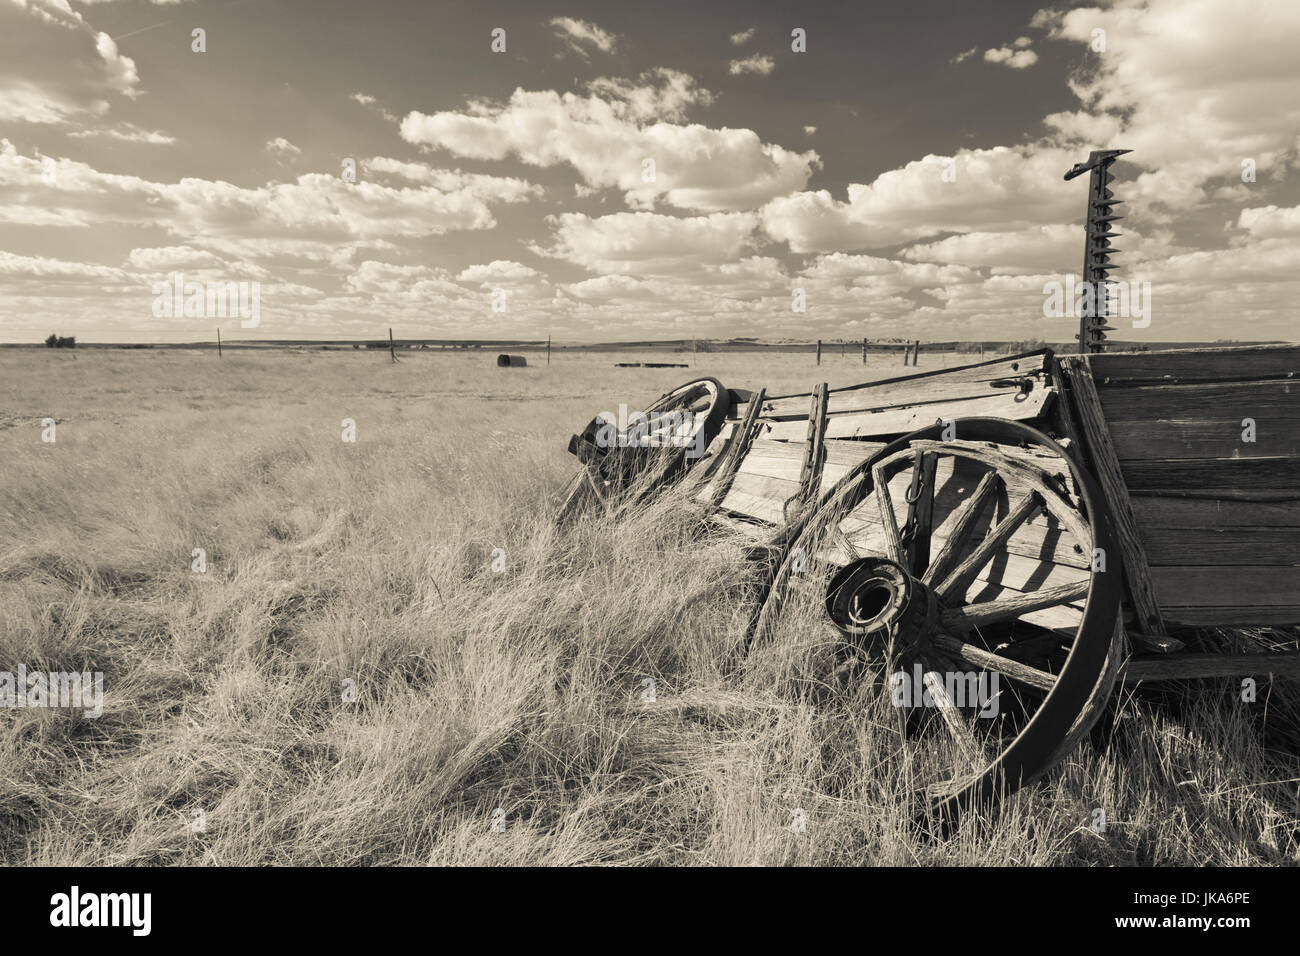 USA, South Dakota, Cactus Flat, Prairie Homestead, old wagon Stock Photo